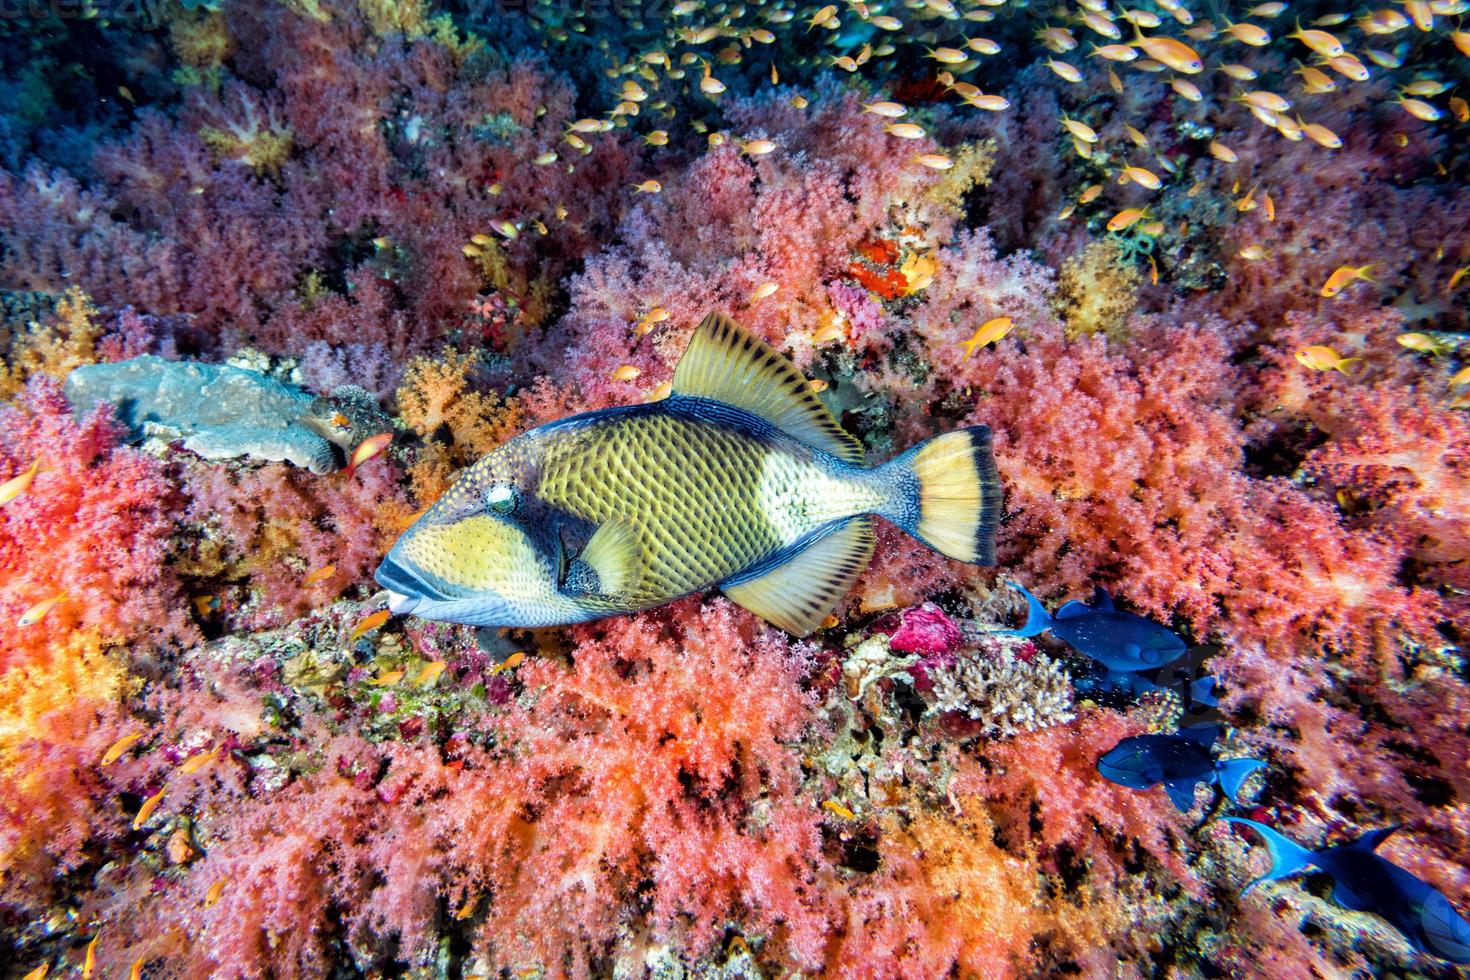 titan avtryckare fisk i maldiverna foto